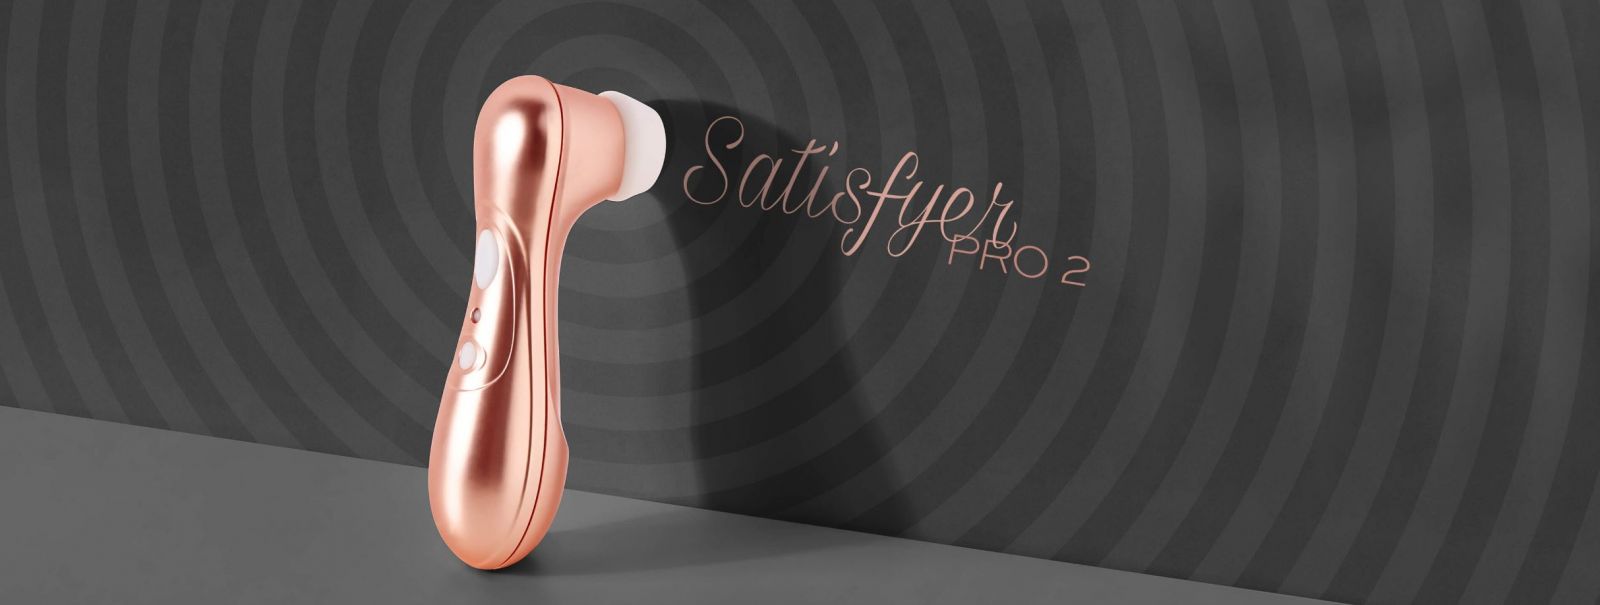 Buy the satisfyer pro 2 advanced clit stimulator online now!